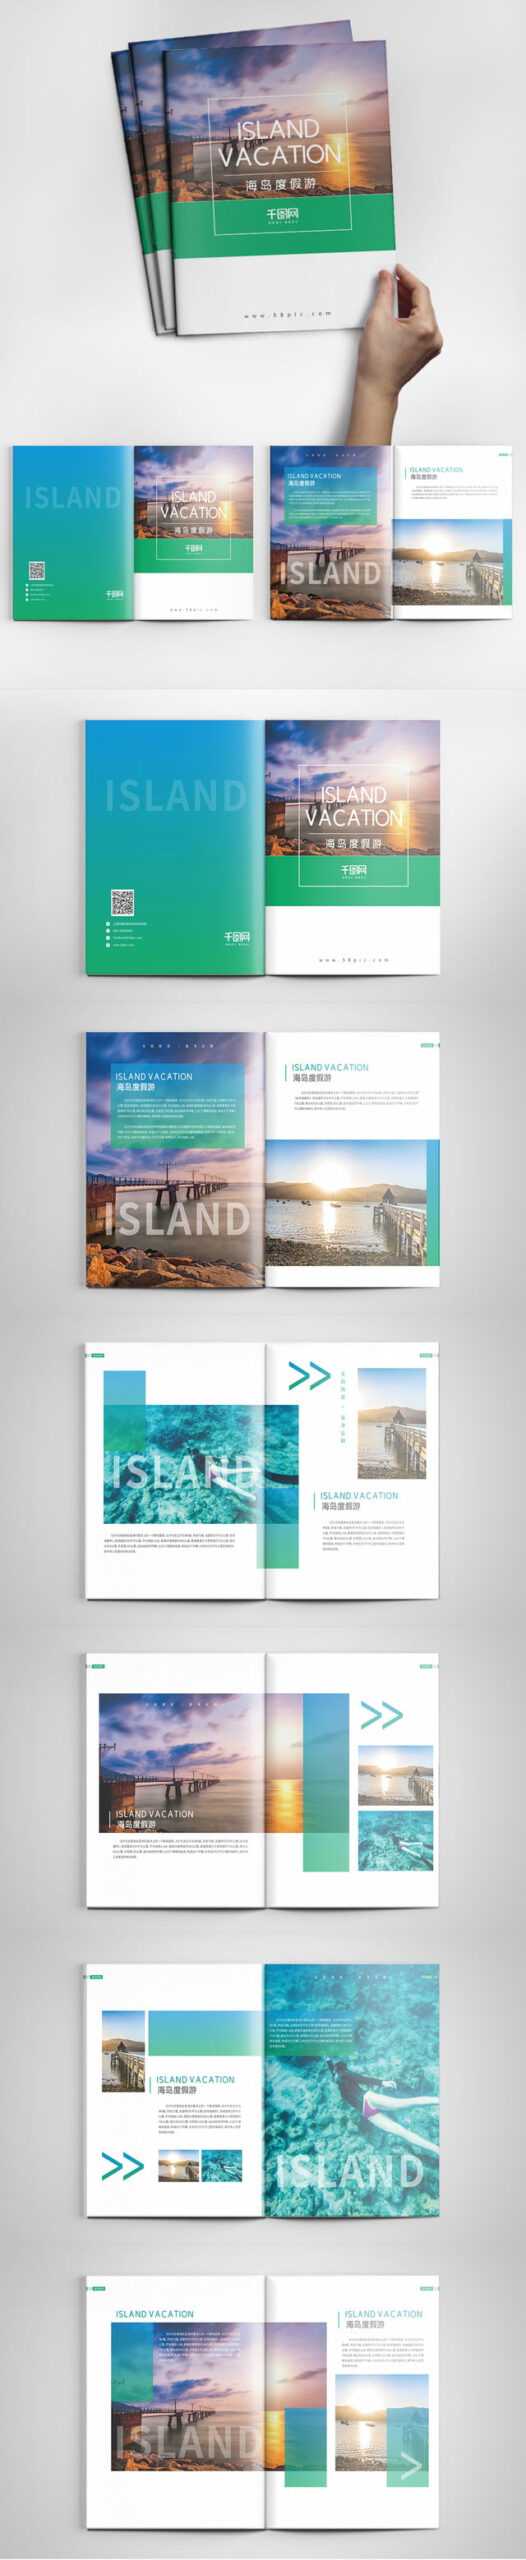 Island Tour Tourism Sea Album Template For Free Download On Regarding Island Brochure Template